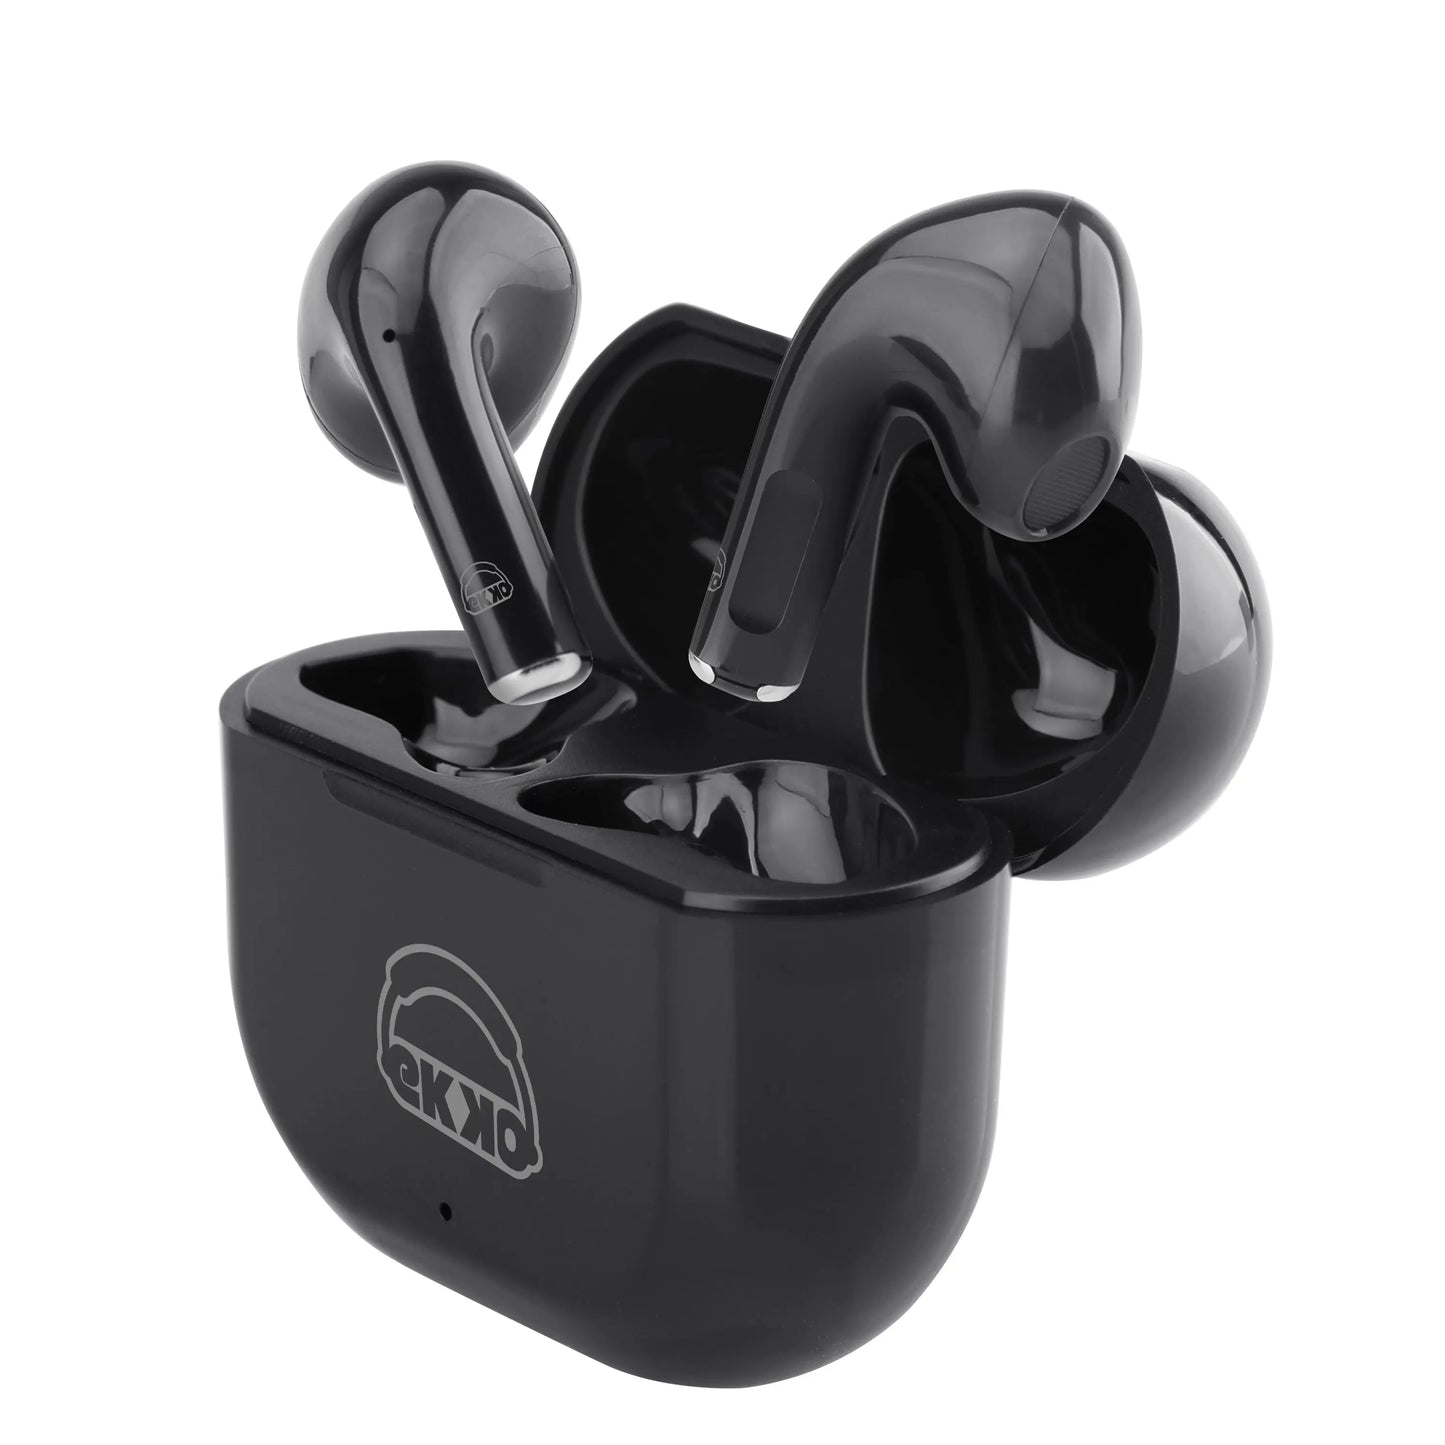 EKKO Earbeats T02 True Wireless Earbuds: 10MM Drivers, Mass Bass, Bluetooth 5.0, Ultimate Comfort, 3-Hour Playback